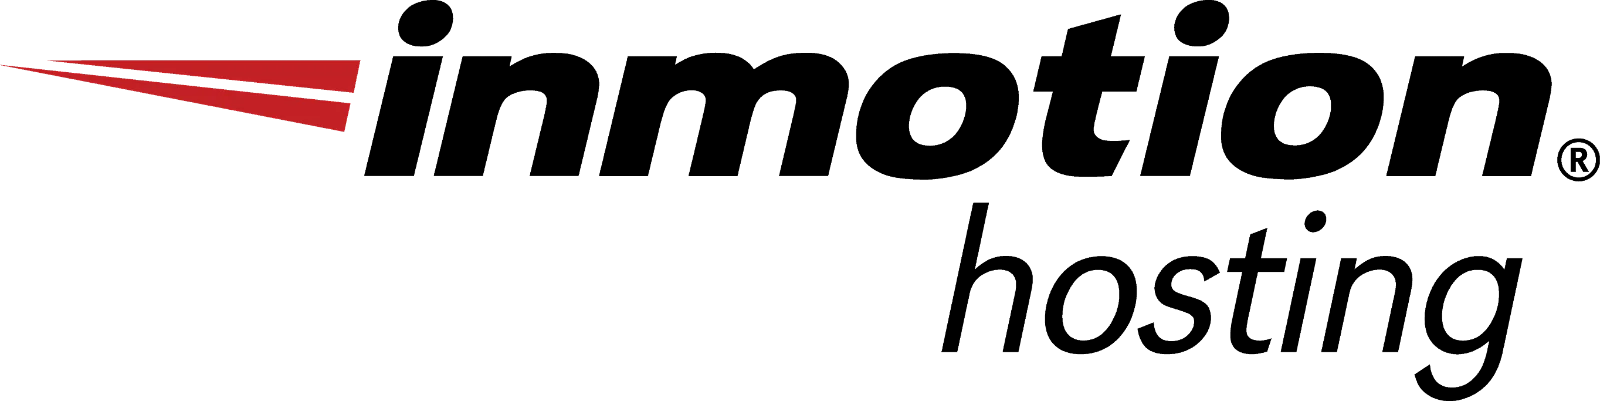 InMotion-Hosting-Black-Friday-Deal-Logo